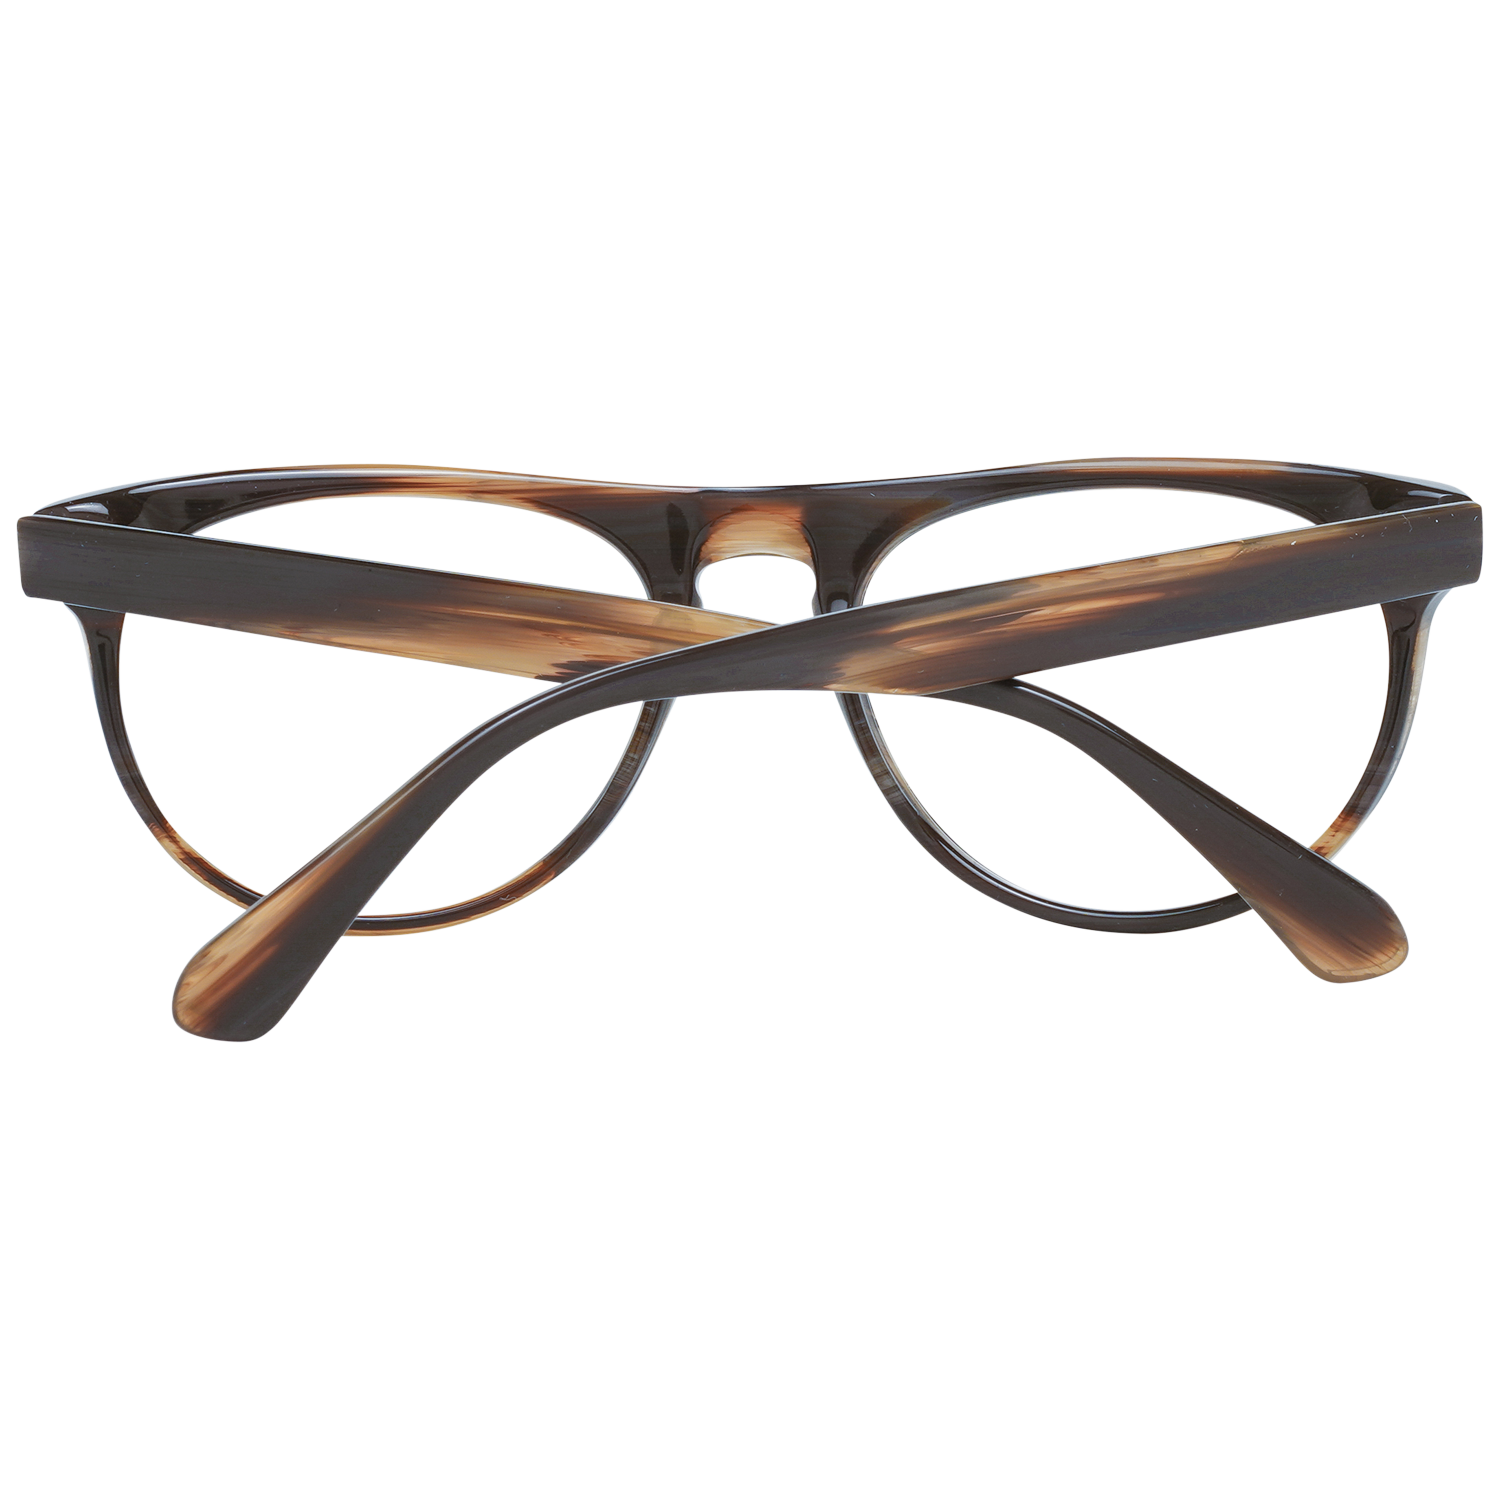 Zac Posen Frames Zac Posen Optical Frame ZIDE BR 53 Idealist Eyeglasses Eyewear UK USA Australia 